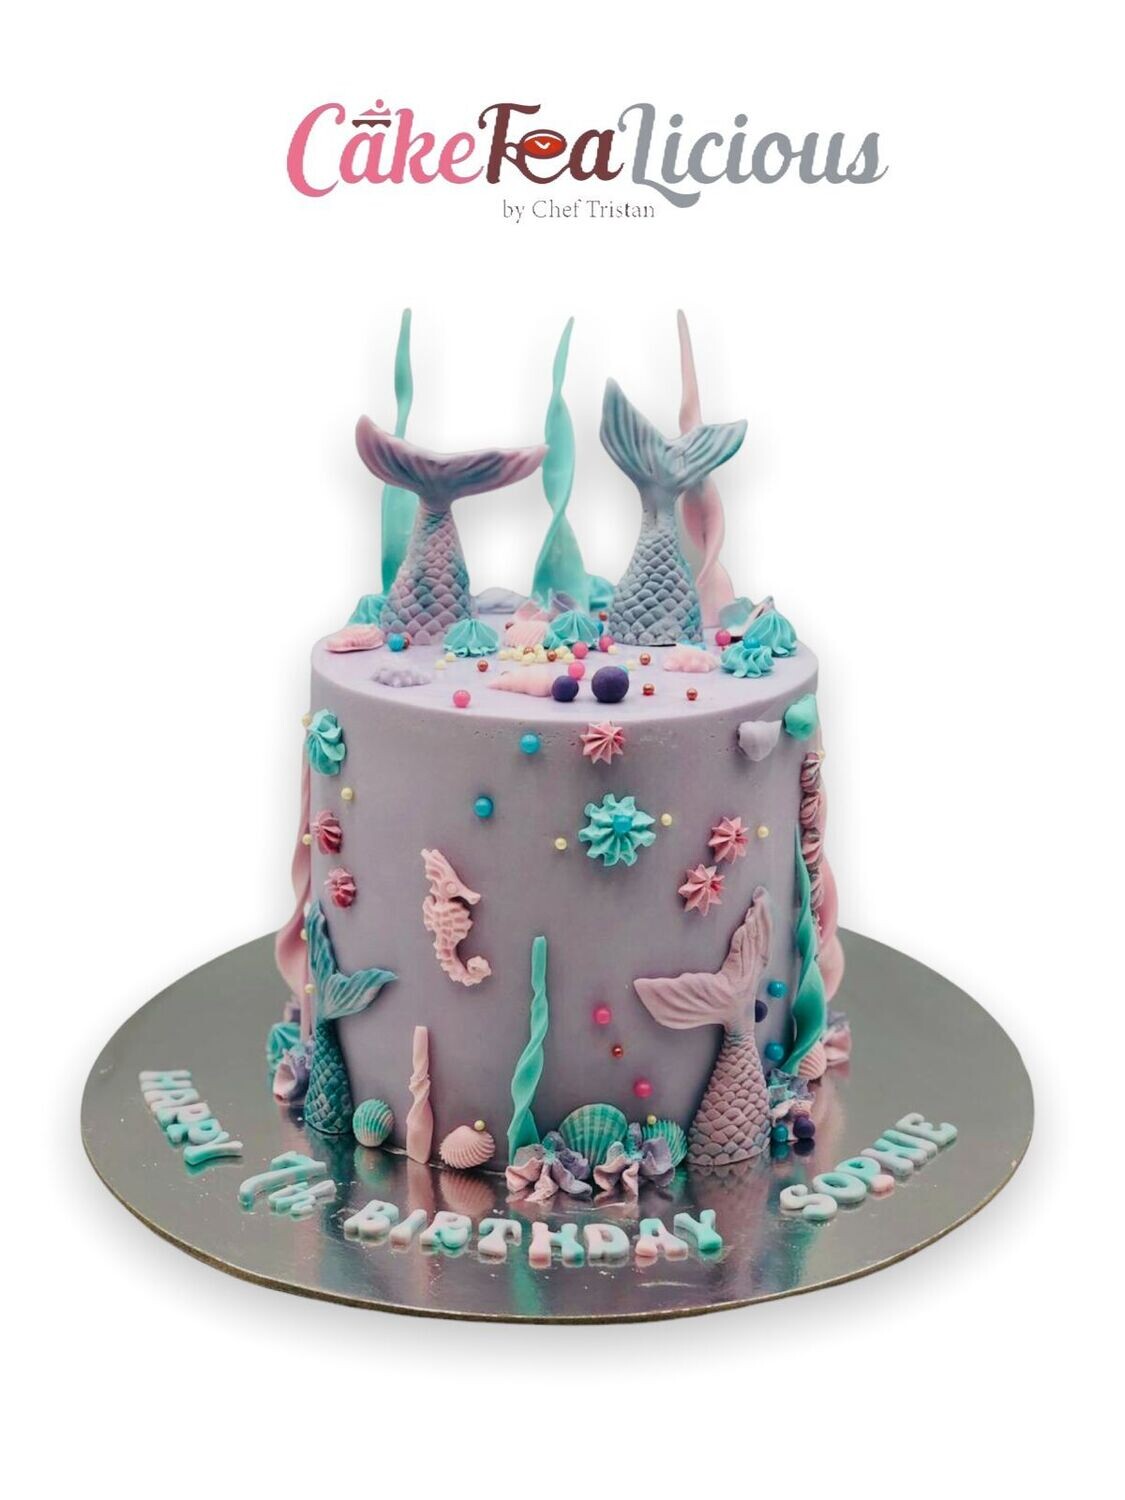 Mermaid Tails Cake